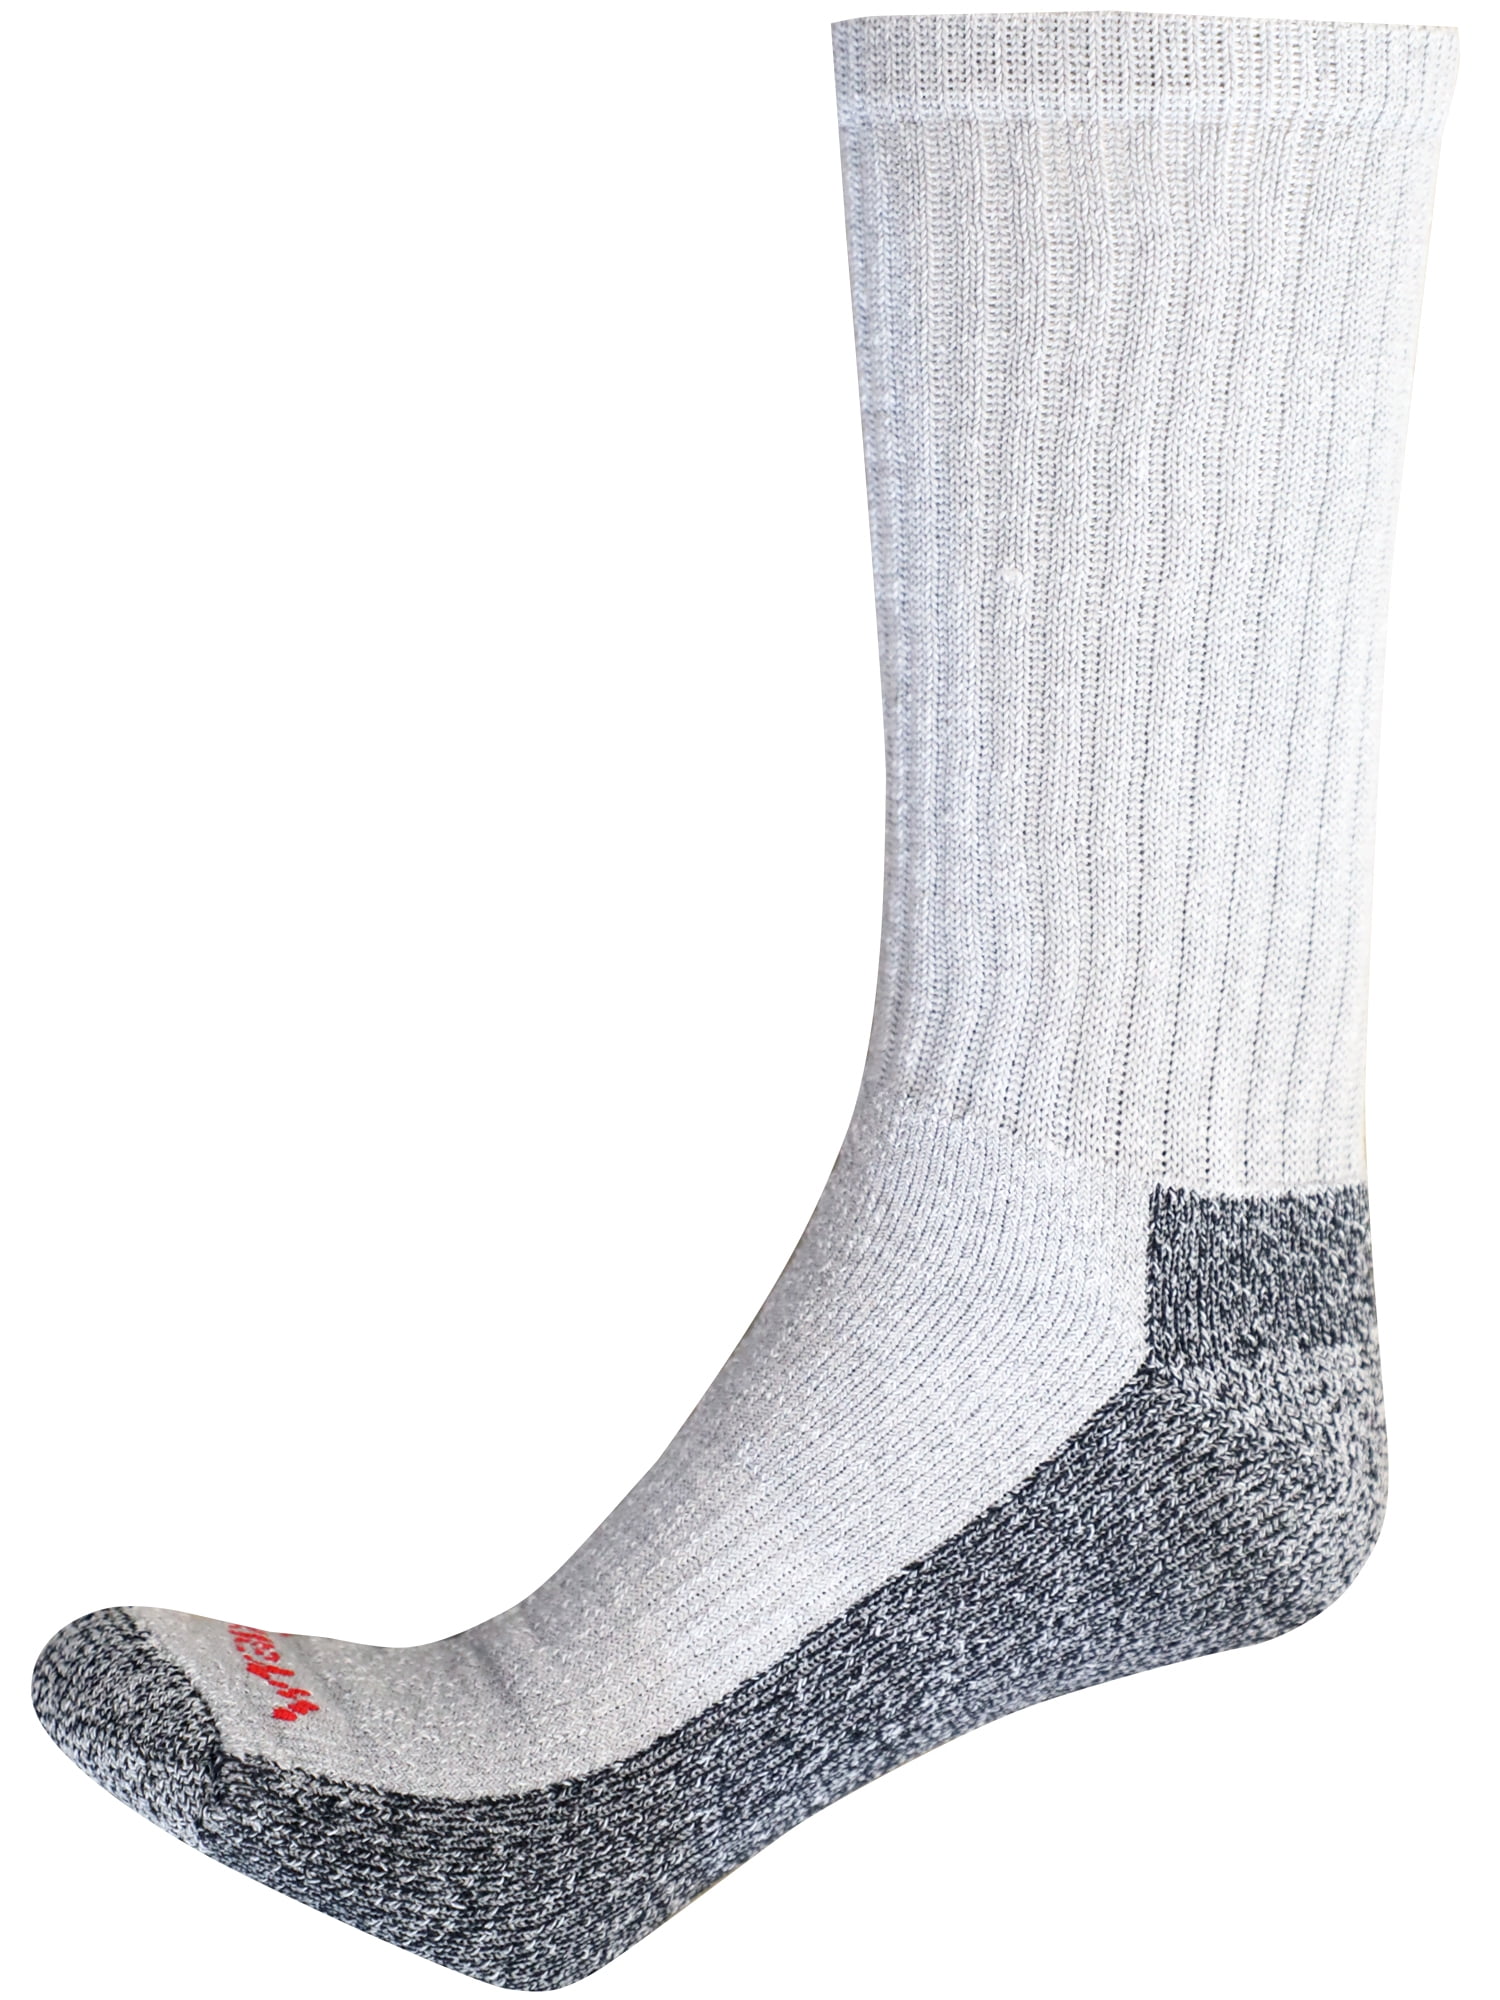 Gray Plaid Compression Socks For Women Casual Fashion Crew Socks 